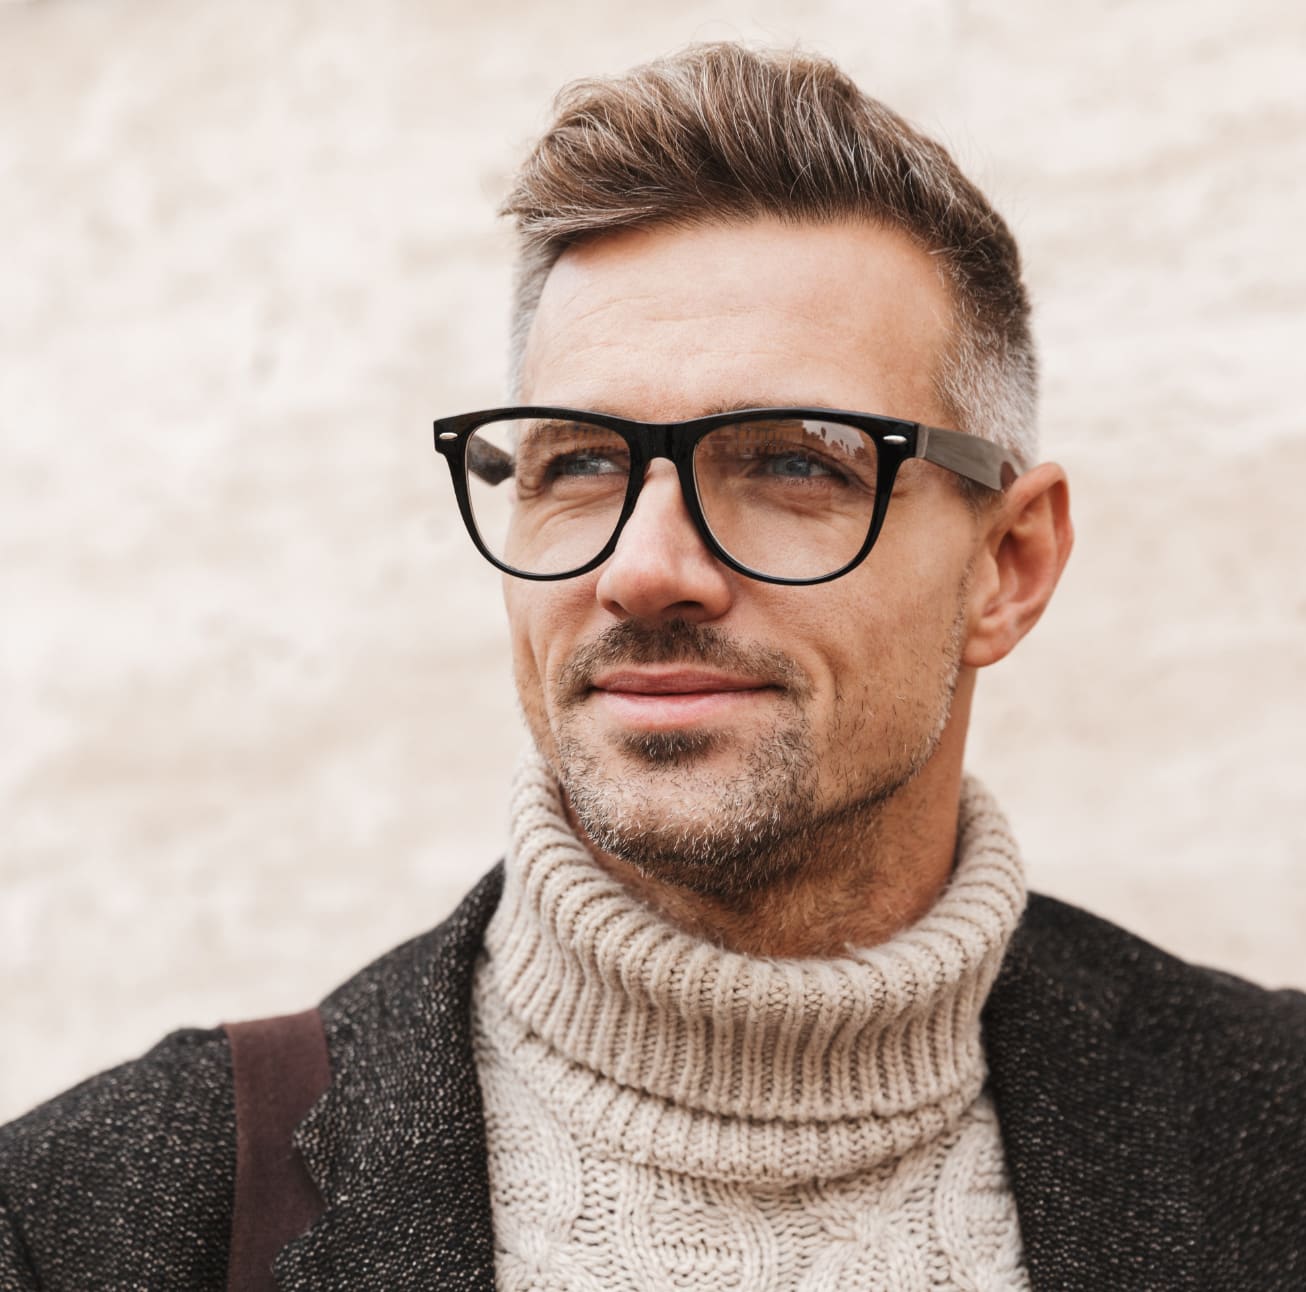 Stylish older man wearing glasses and a turtleneck sweater under a blazer